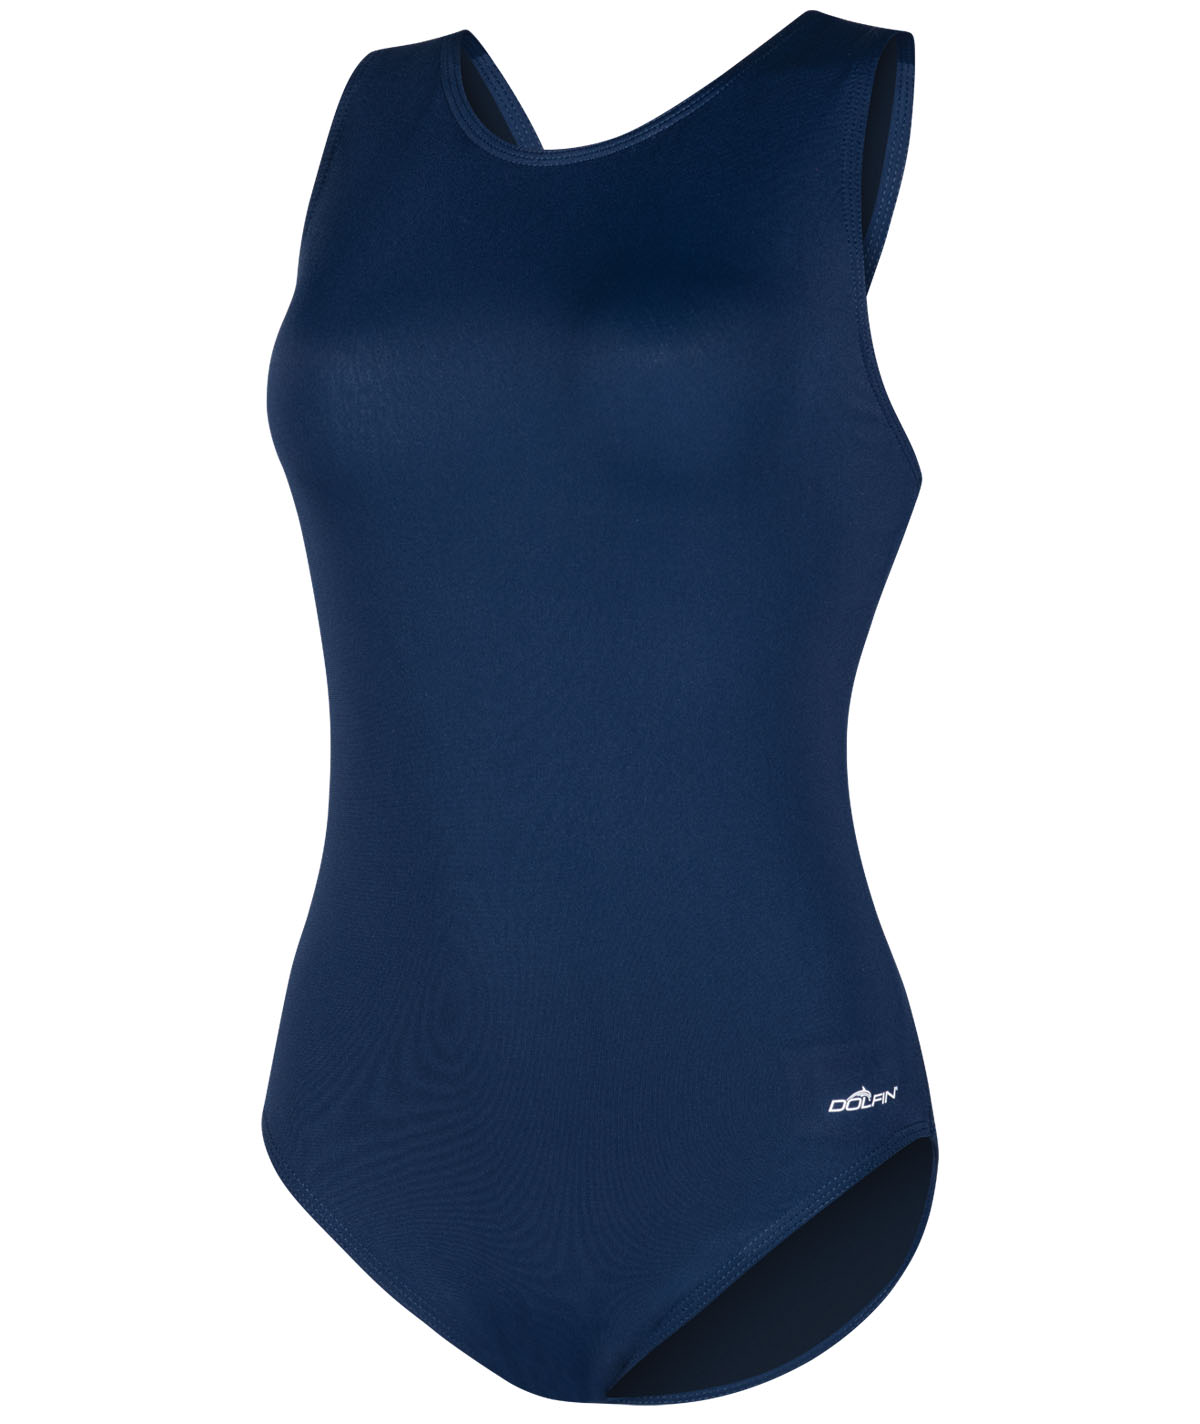 Women's Aquashape Moderate Lap Swimsuit